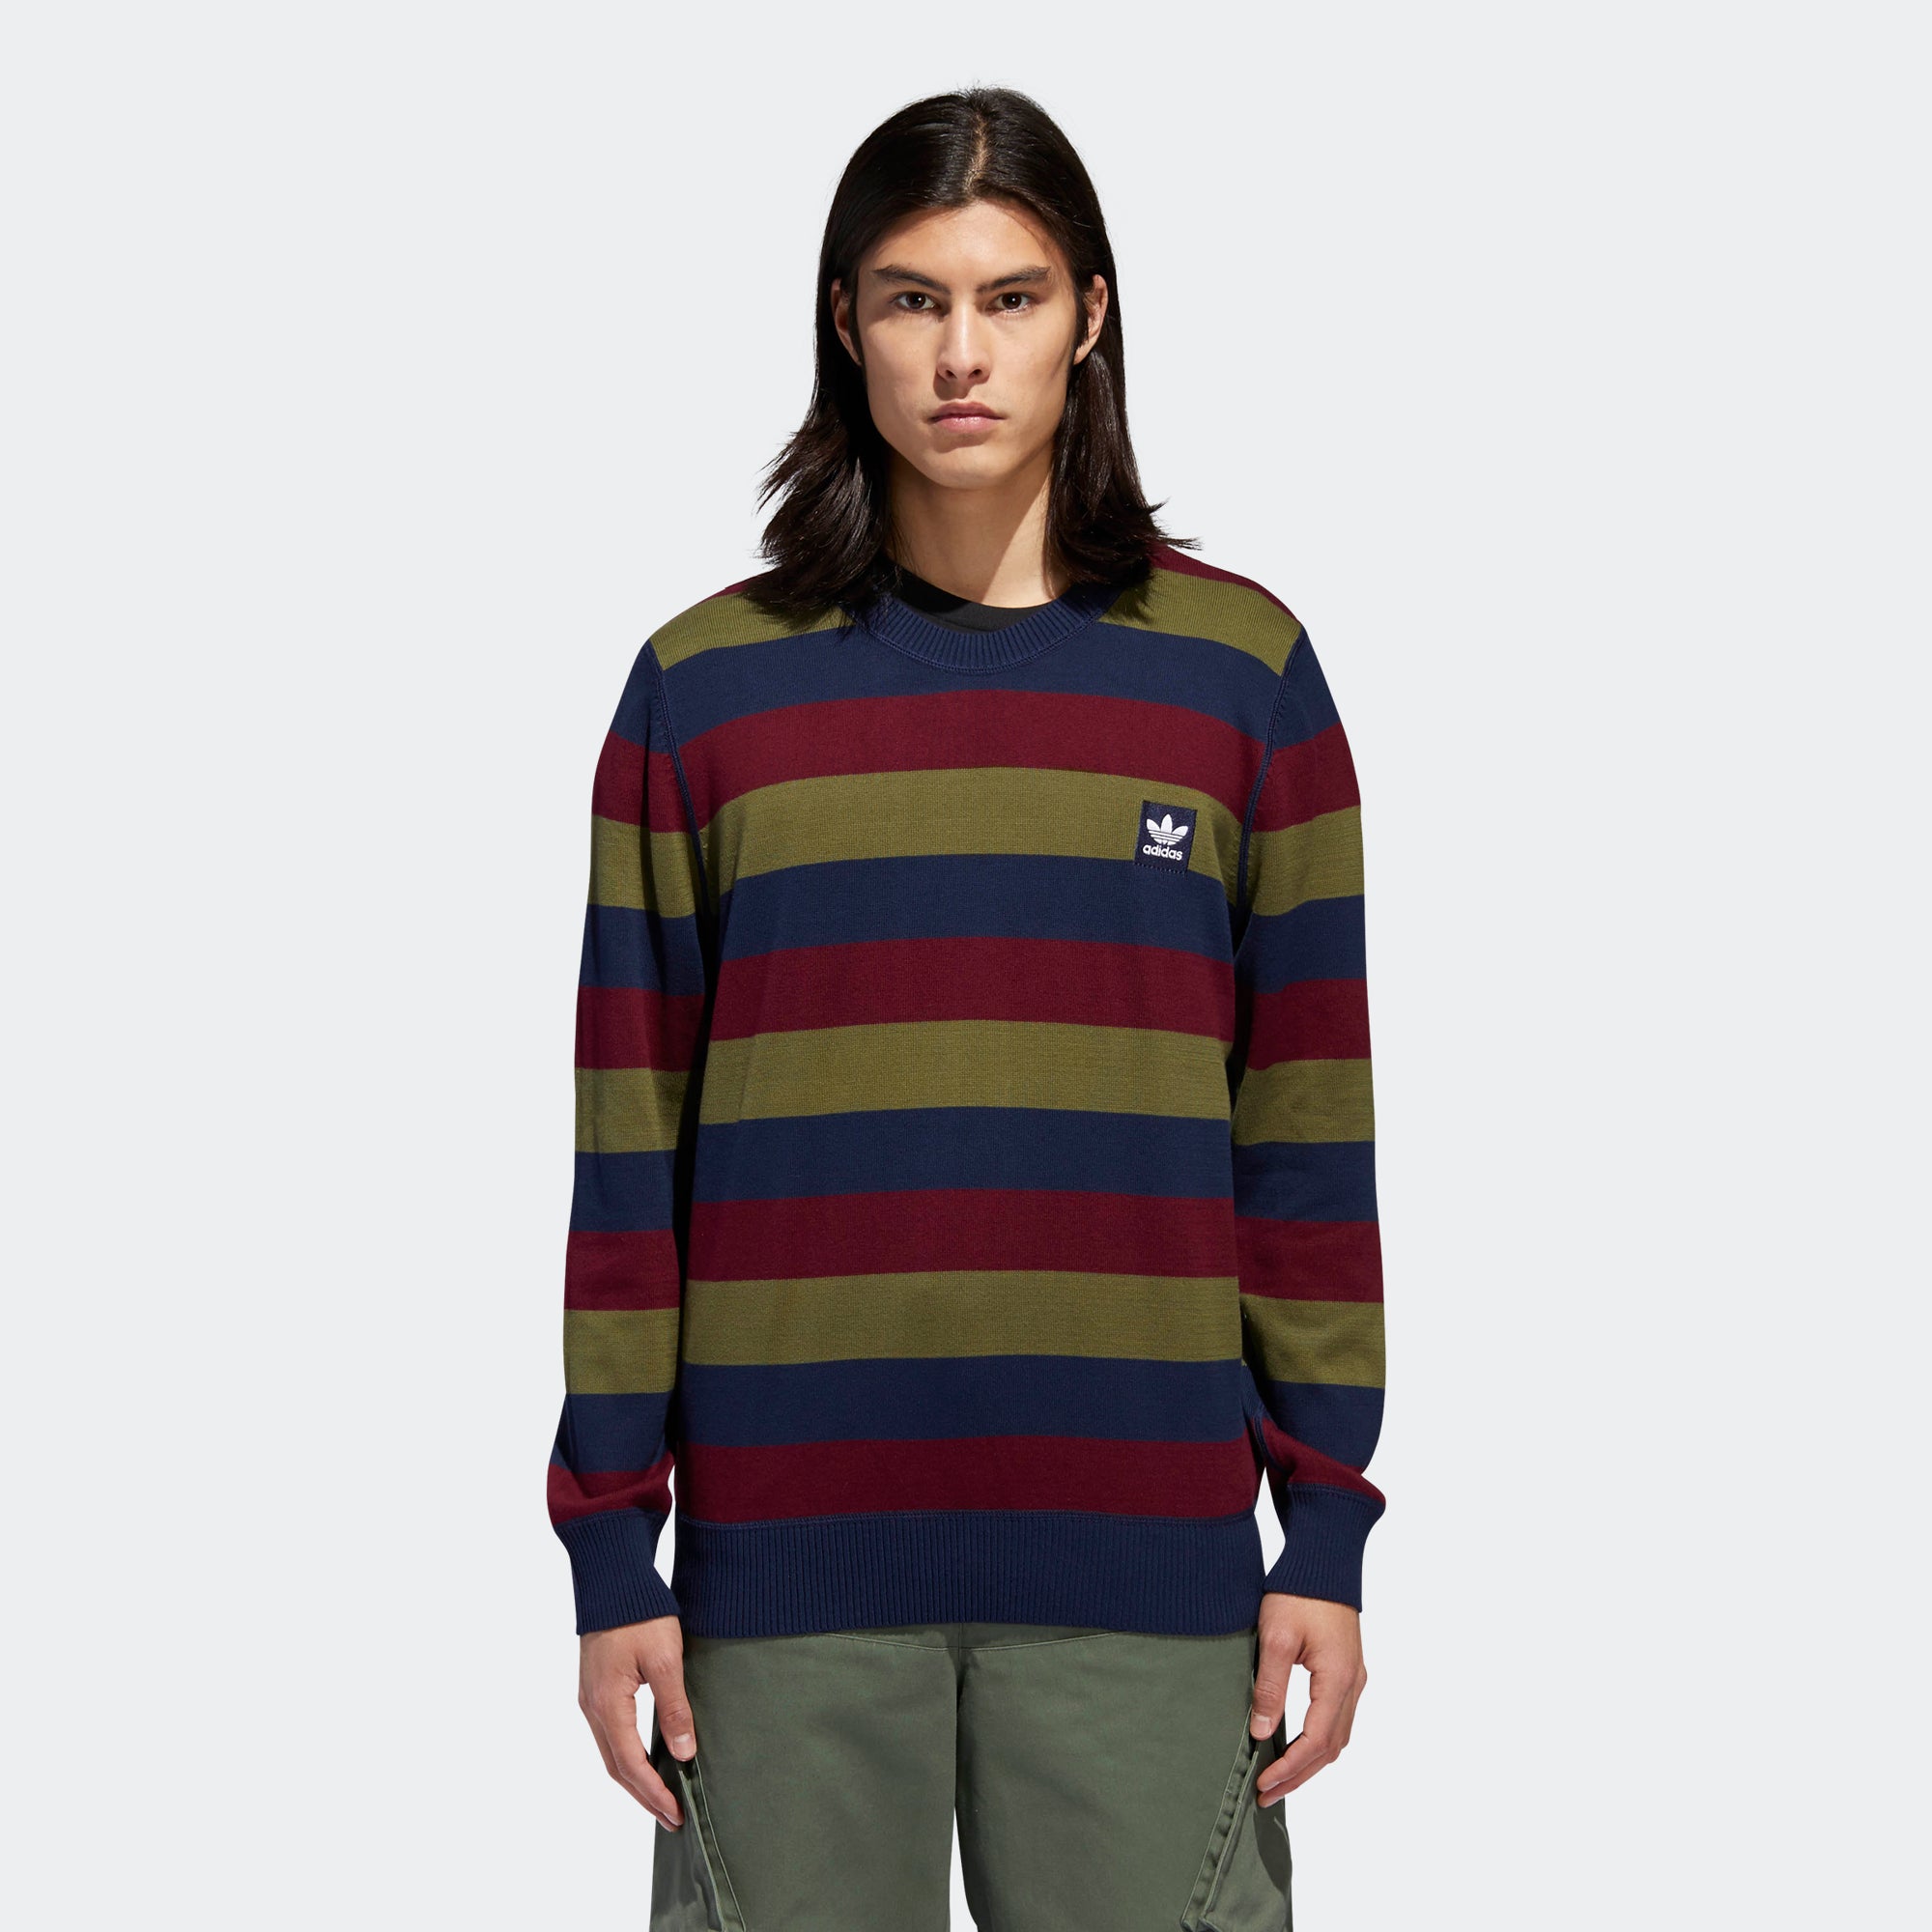 adidas stripes sweater